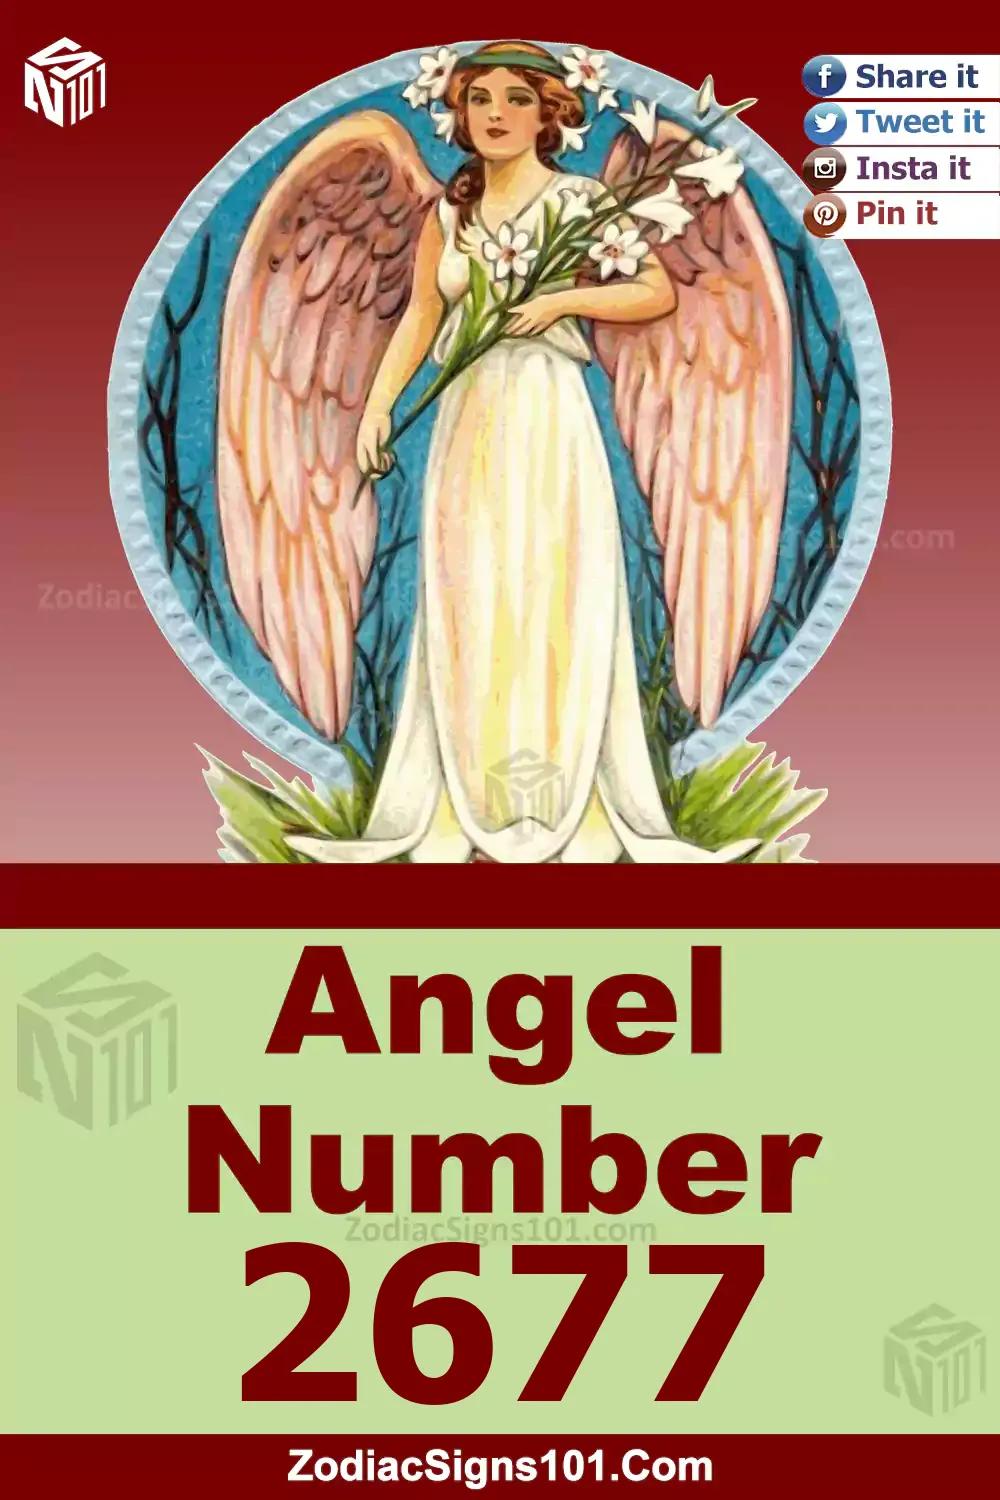 2677-Angel-Number-Meaning.jpg